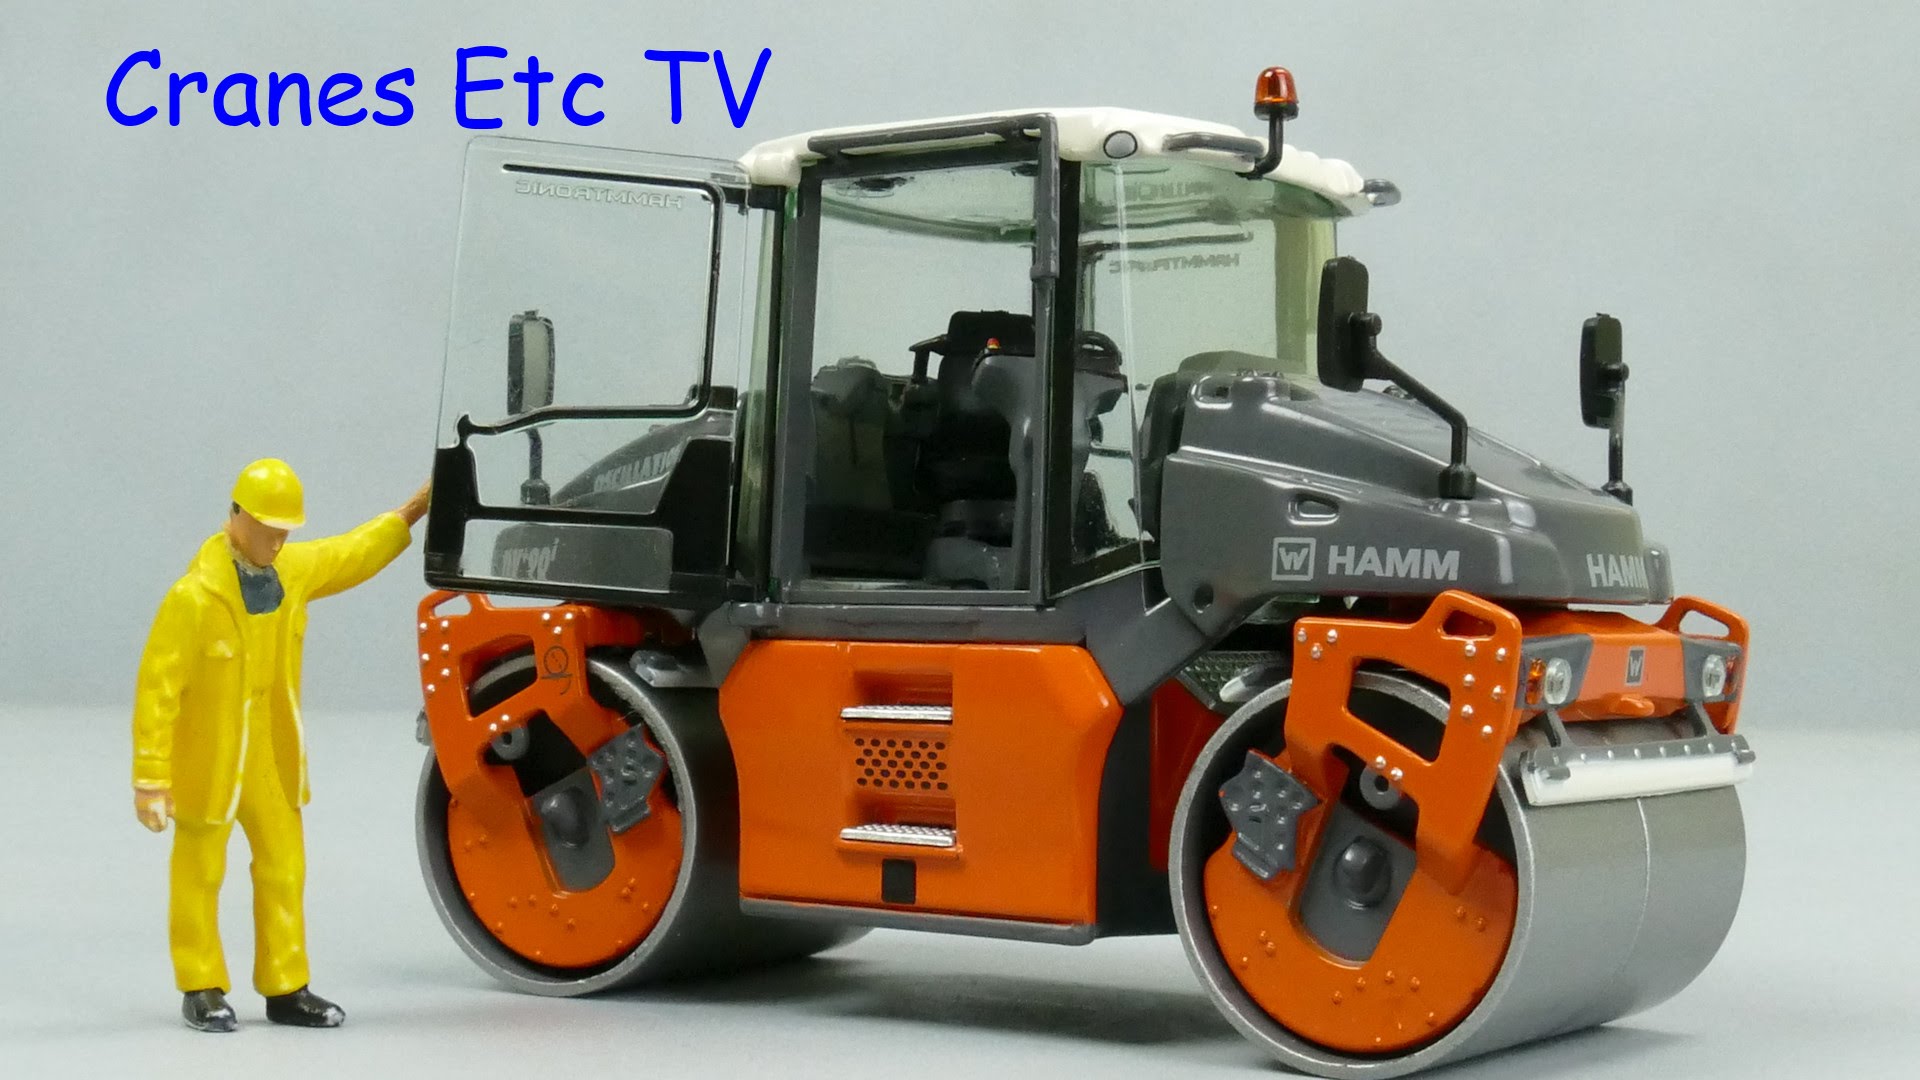 NZG Hamm DV+ 90i VV Tandem Roller by Cranes Etc TV - YouTube